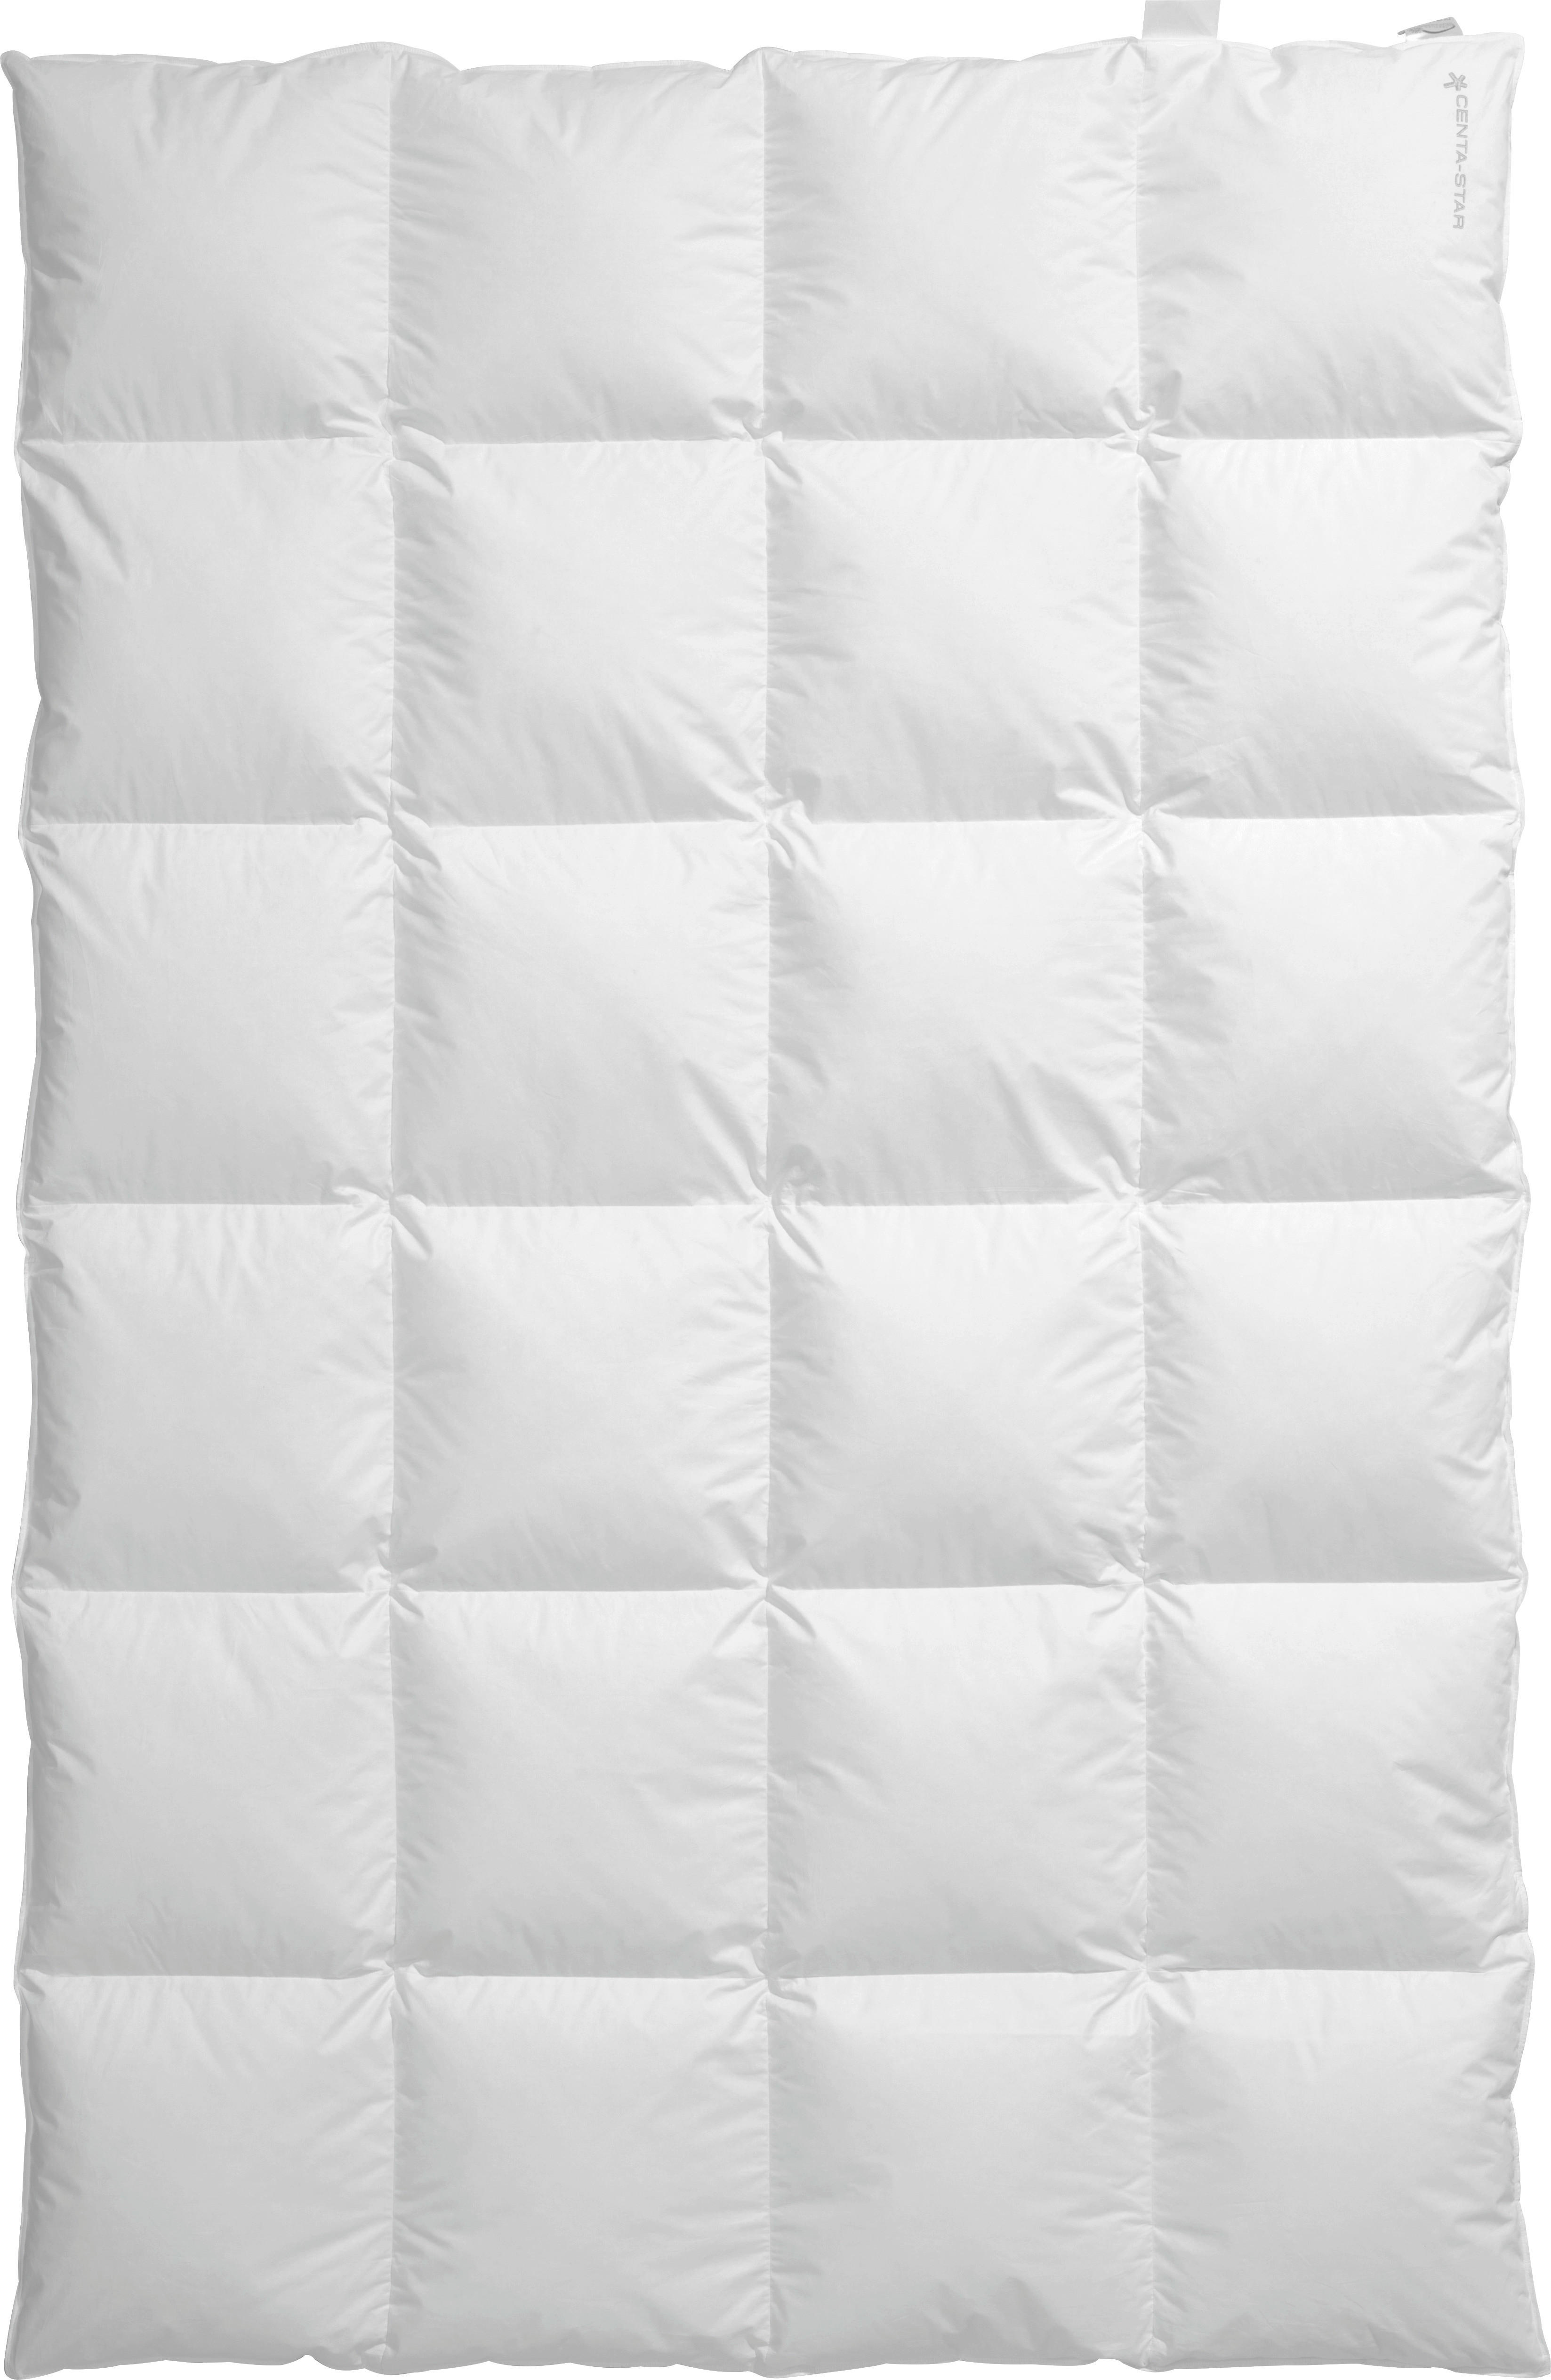 DAUNENDECKE  Silence  135/200 cm   - Weiß, LIFESTYLE, Textil (135/200cm) - Centa-Star